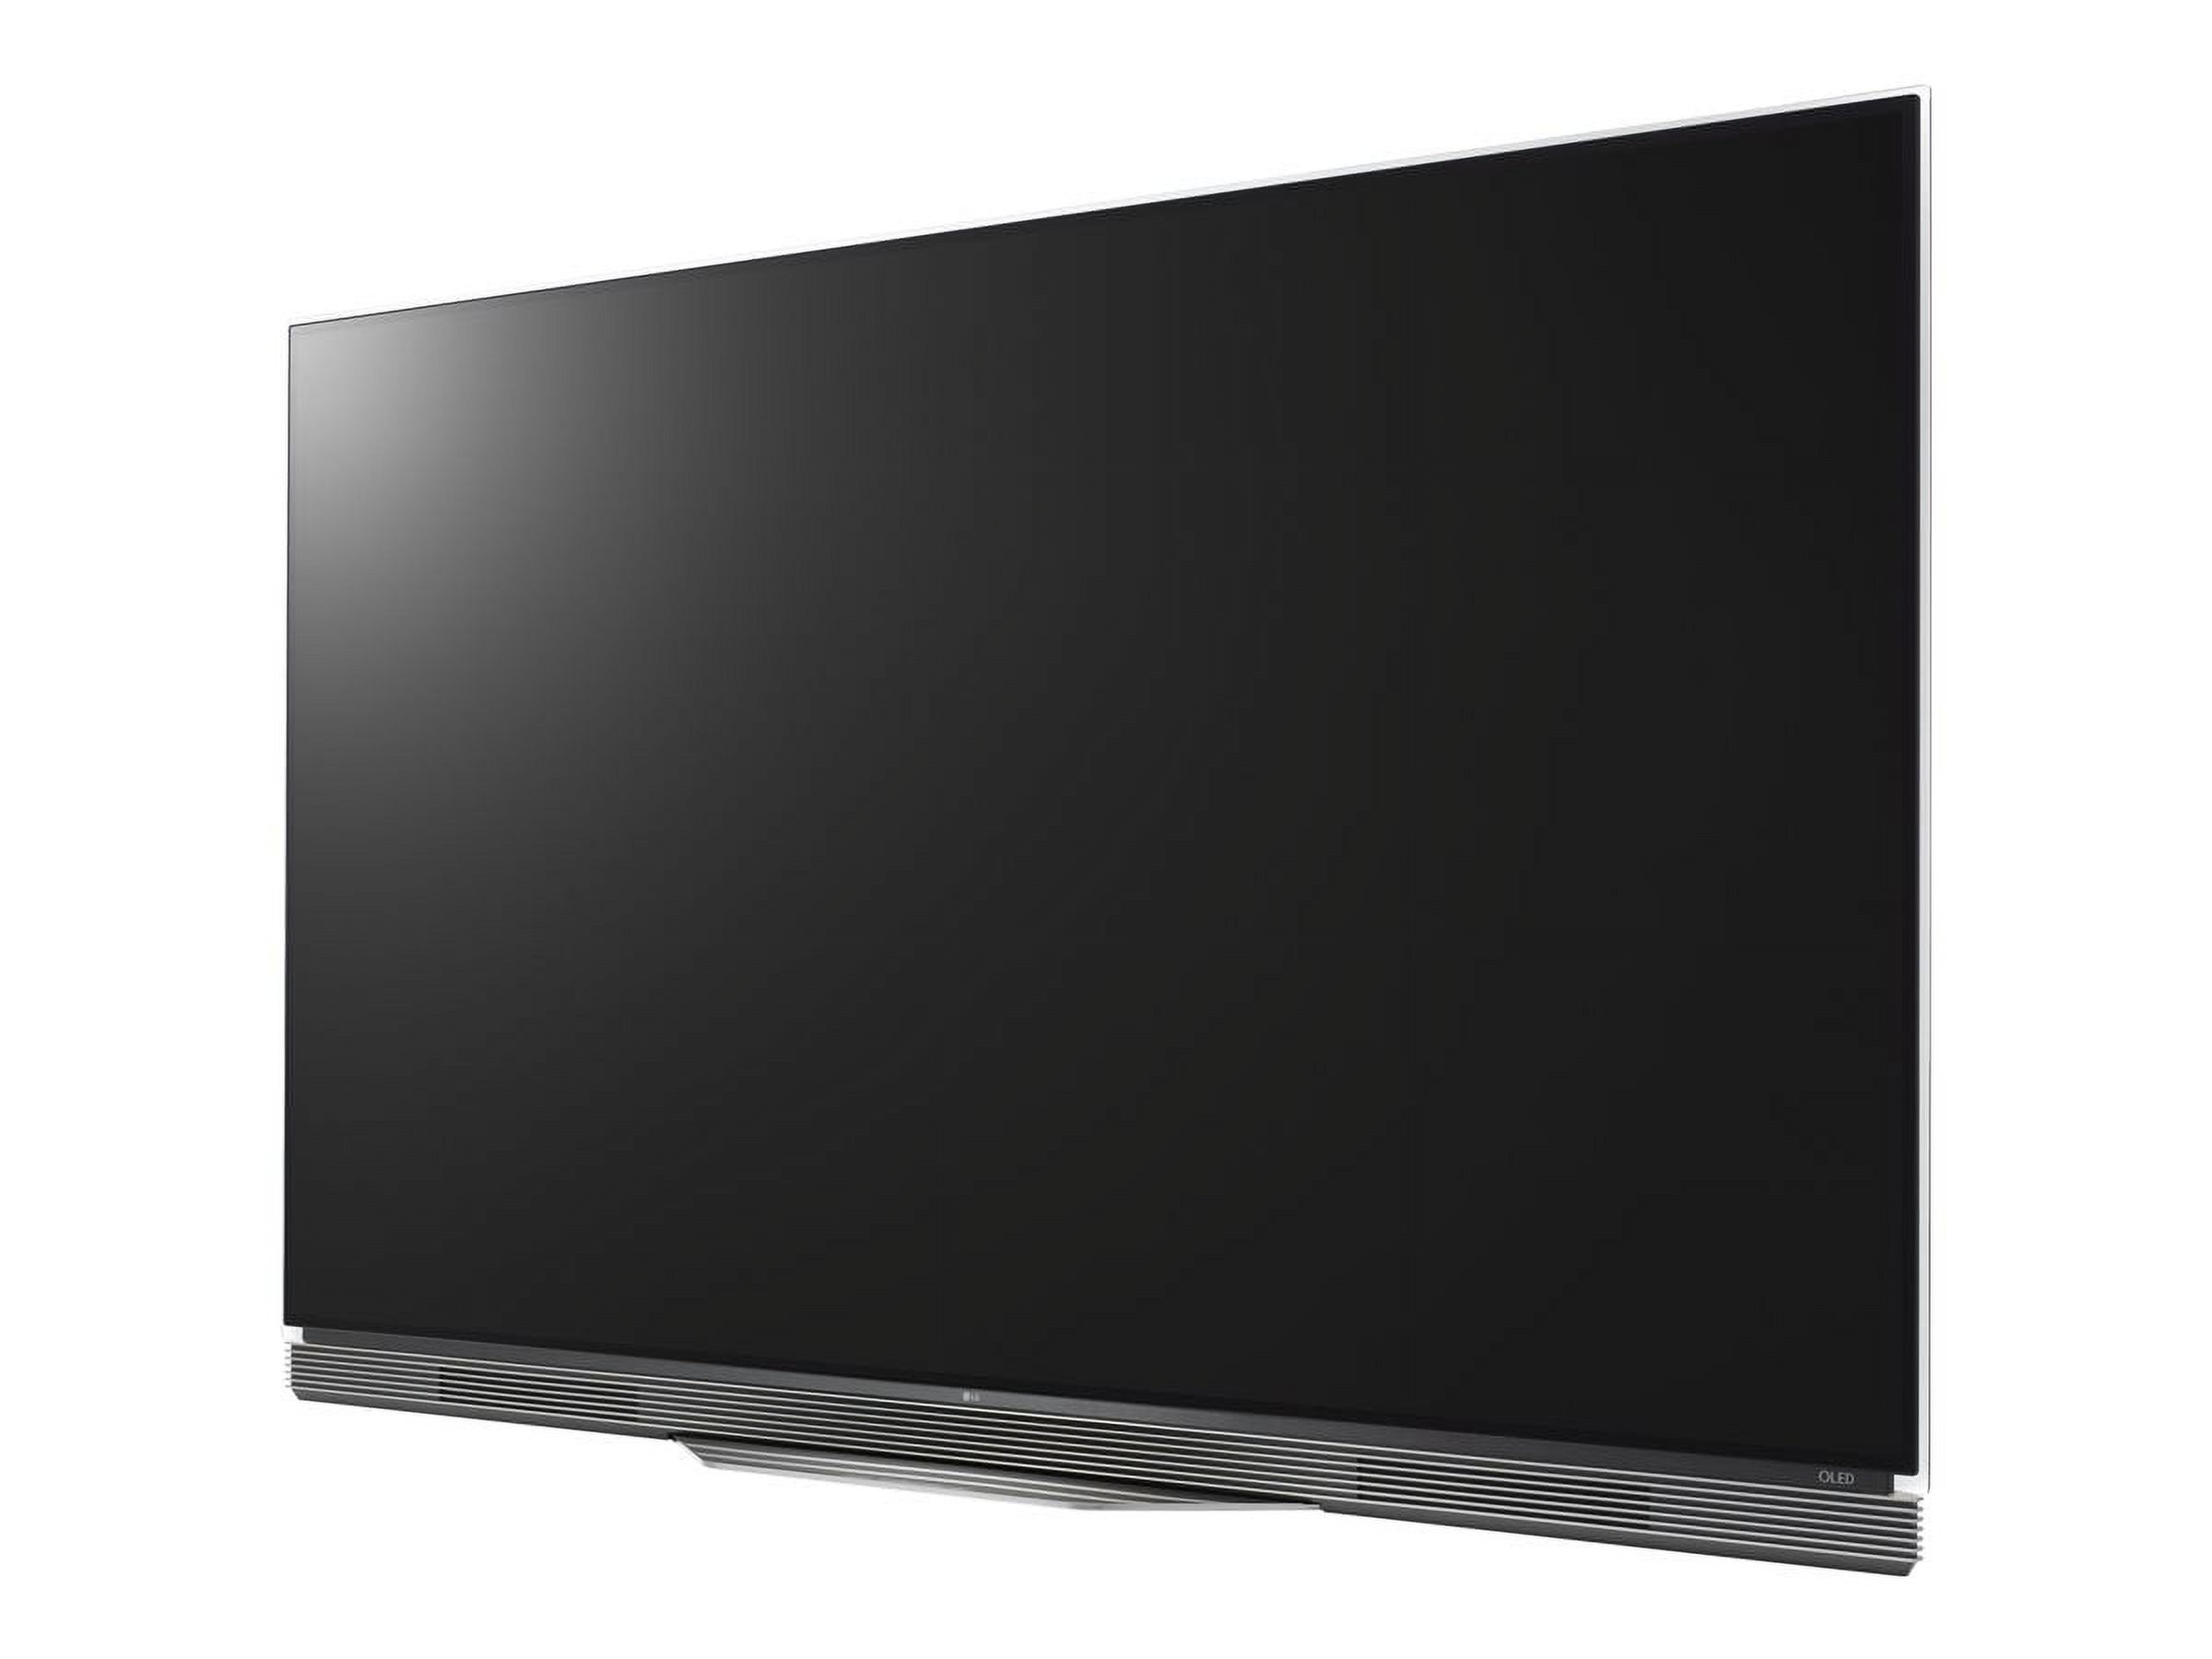 LG 55" Class 4K UHDTV (2160p) Smart OLED TV (OLED55E6P) - image 5 of 15